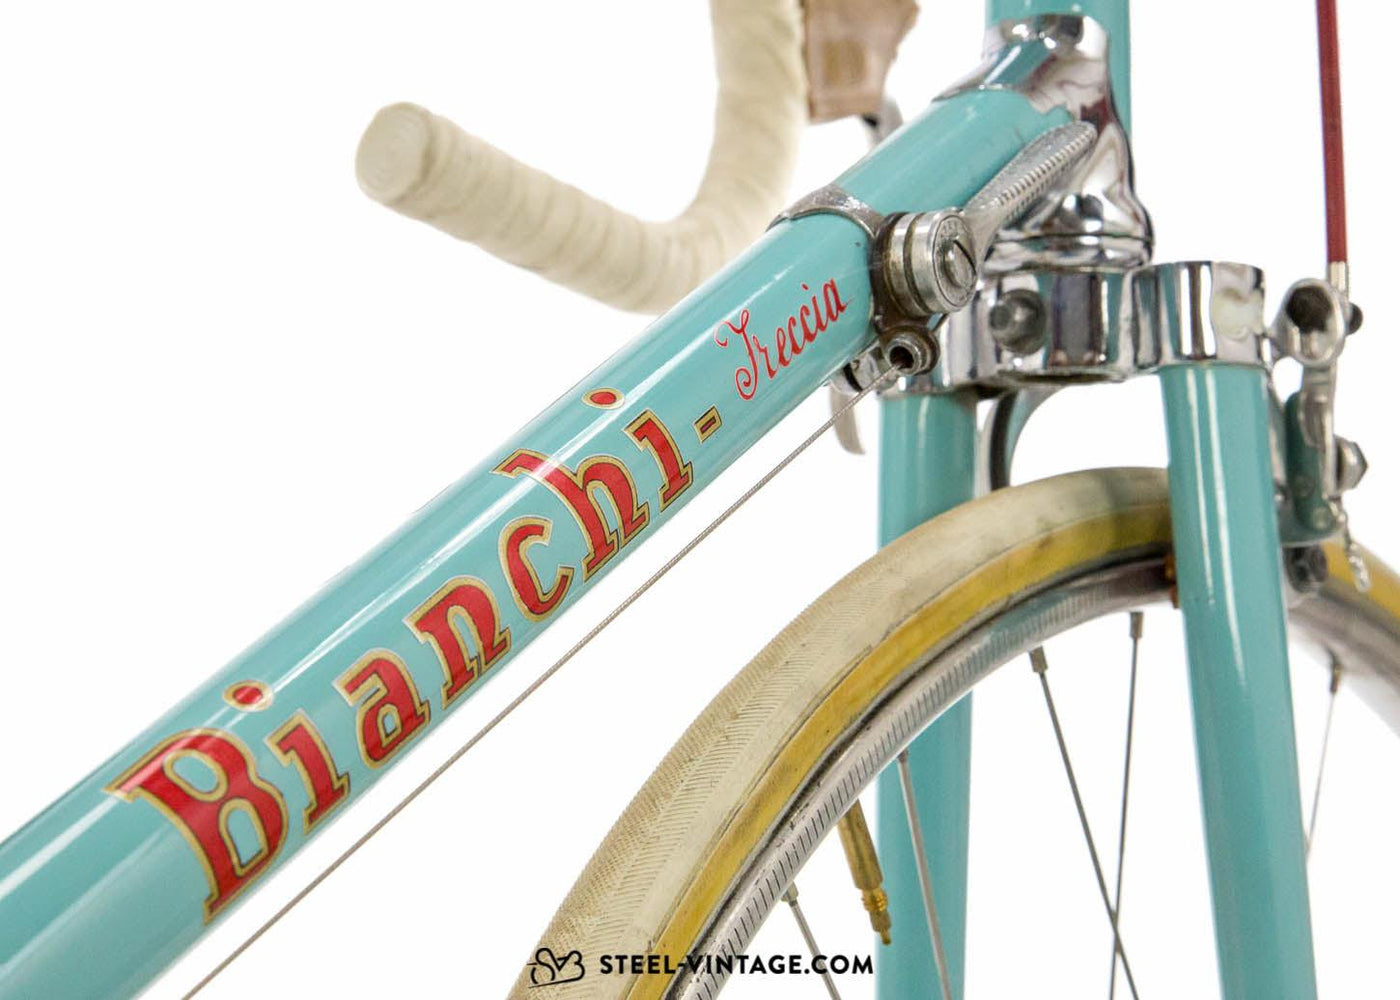 Bianchi Freccia Classic Road Bike 1953 - Steel Vintage Bikes